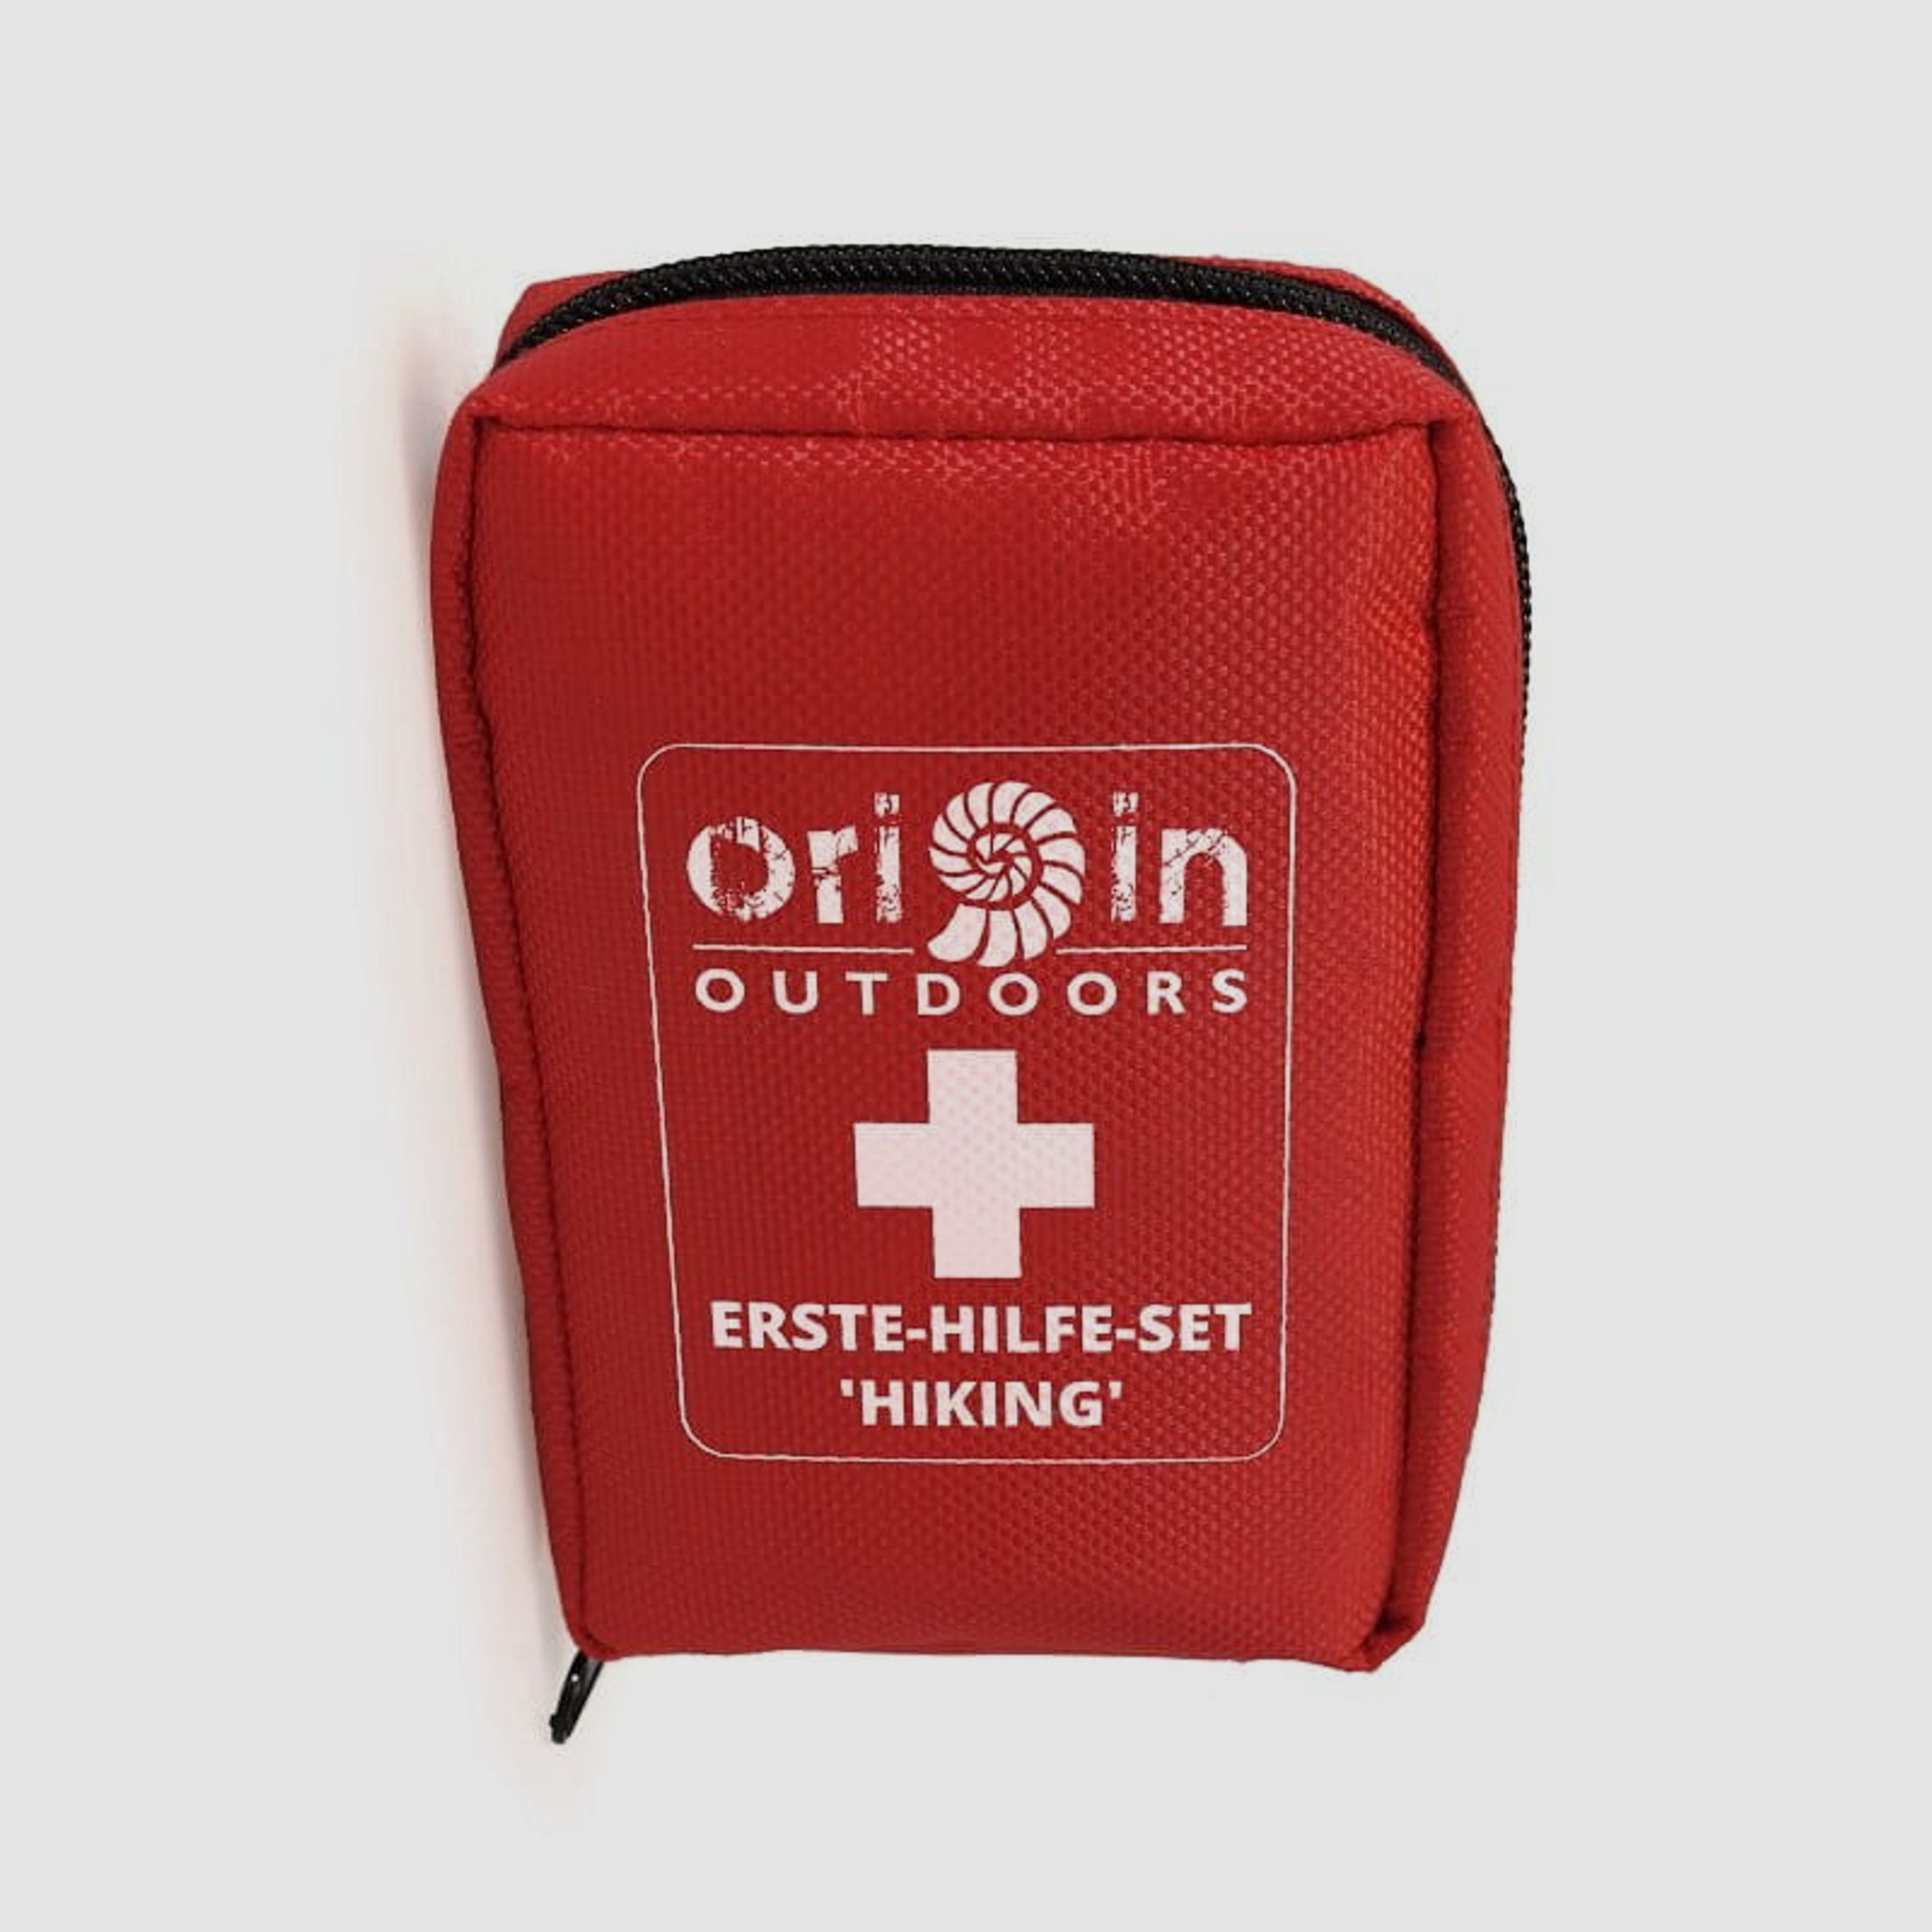 Origin Outdoors Hiking Erste-Hilfe-Set